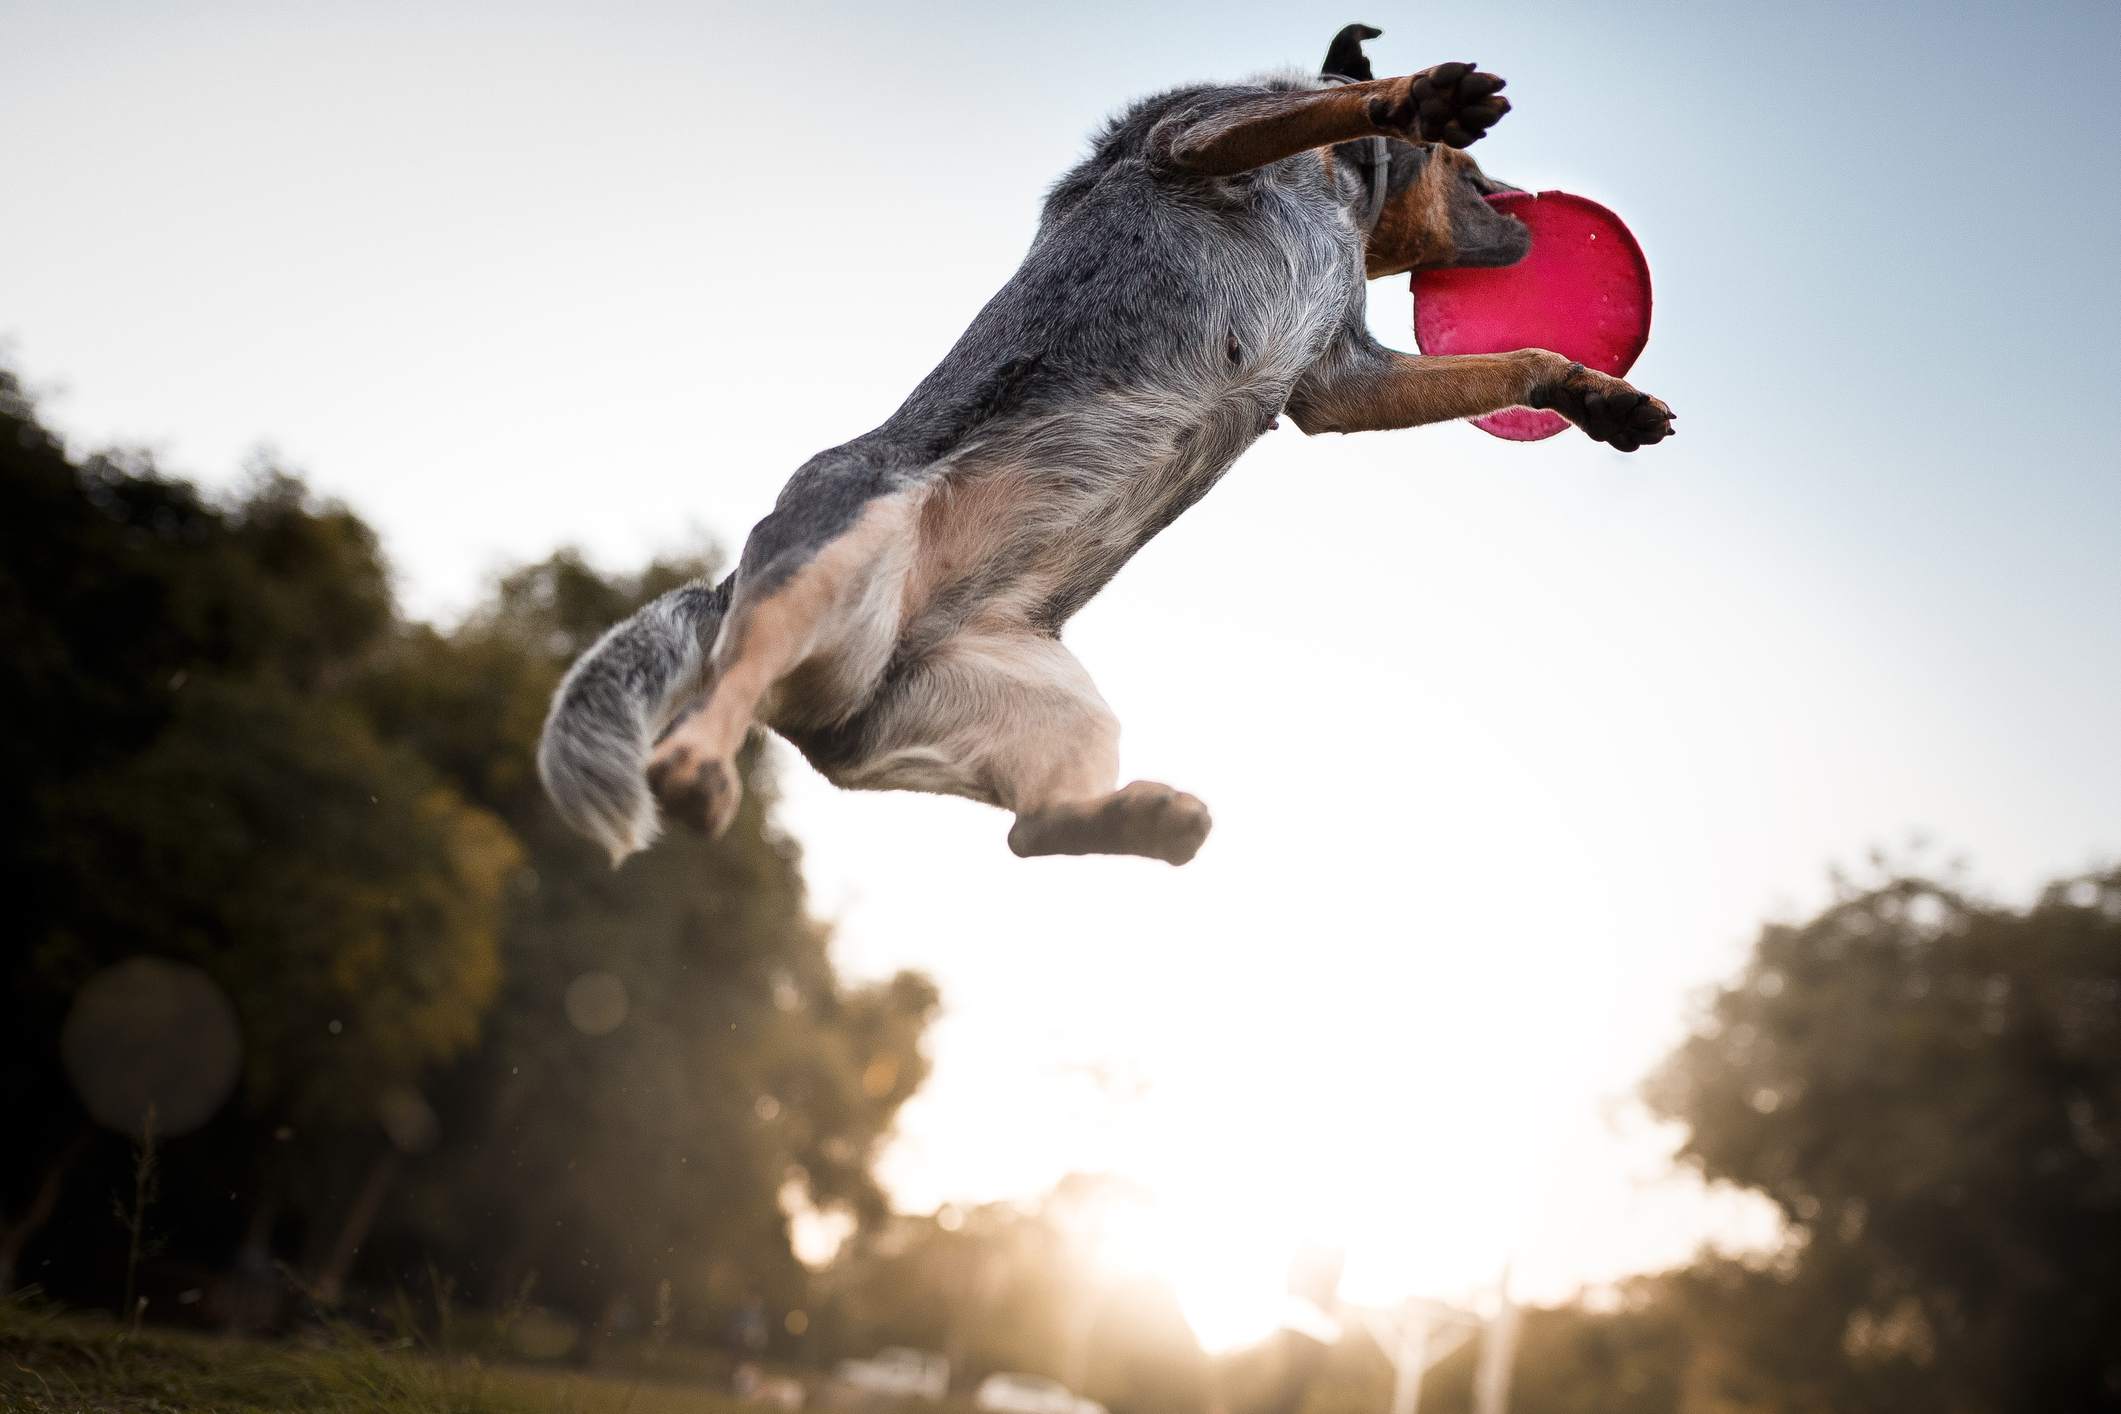 Australian Cattle Dog catching frisbee